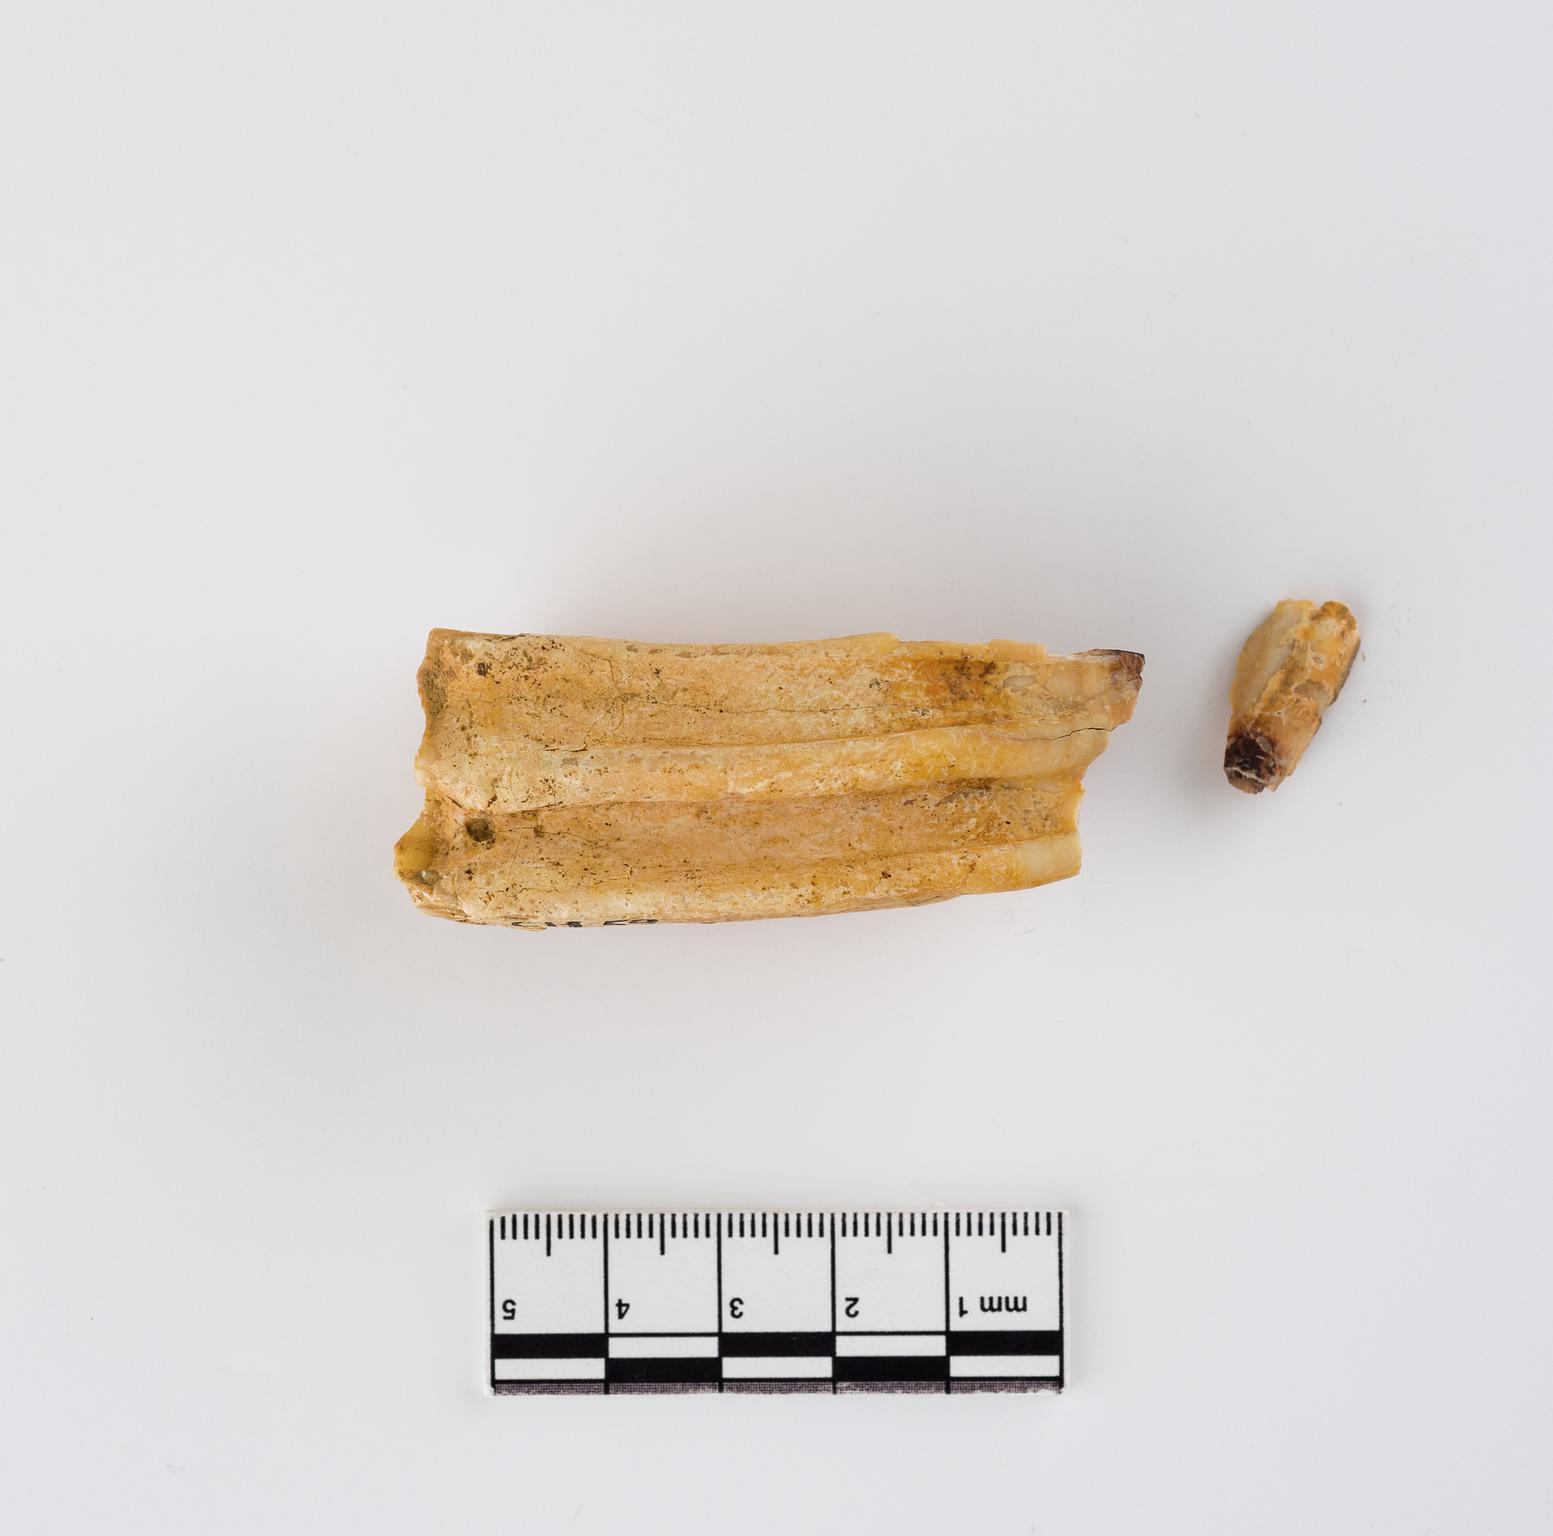 Pleistocene horse tooth